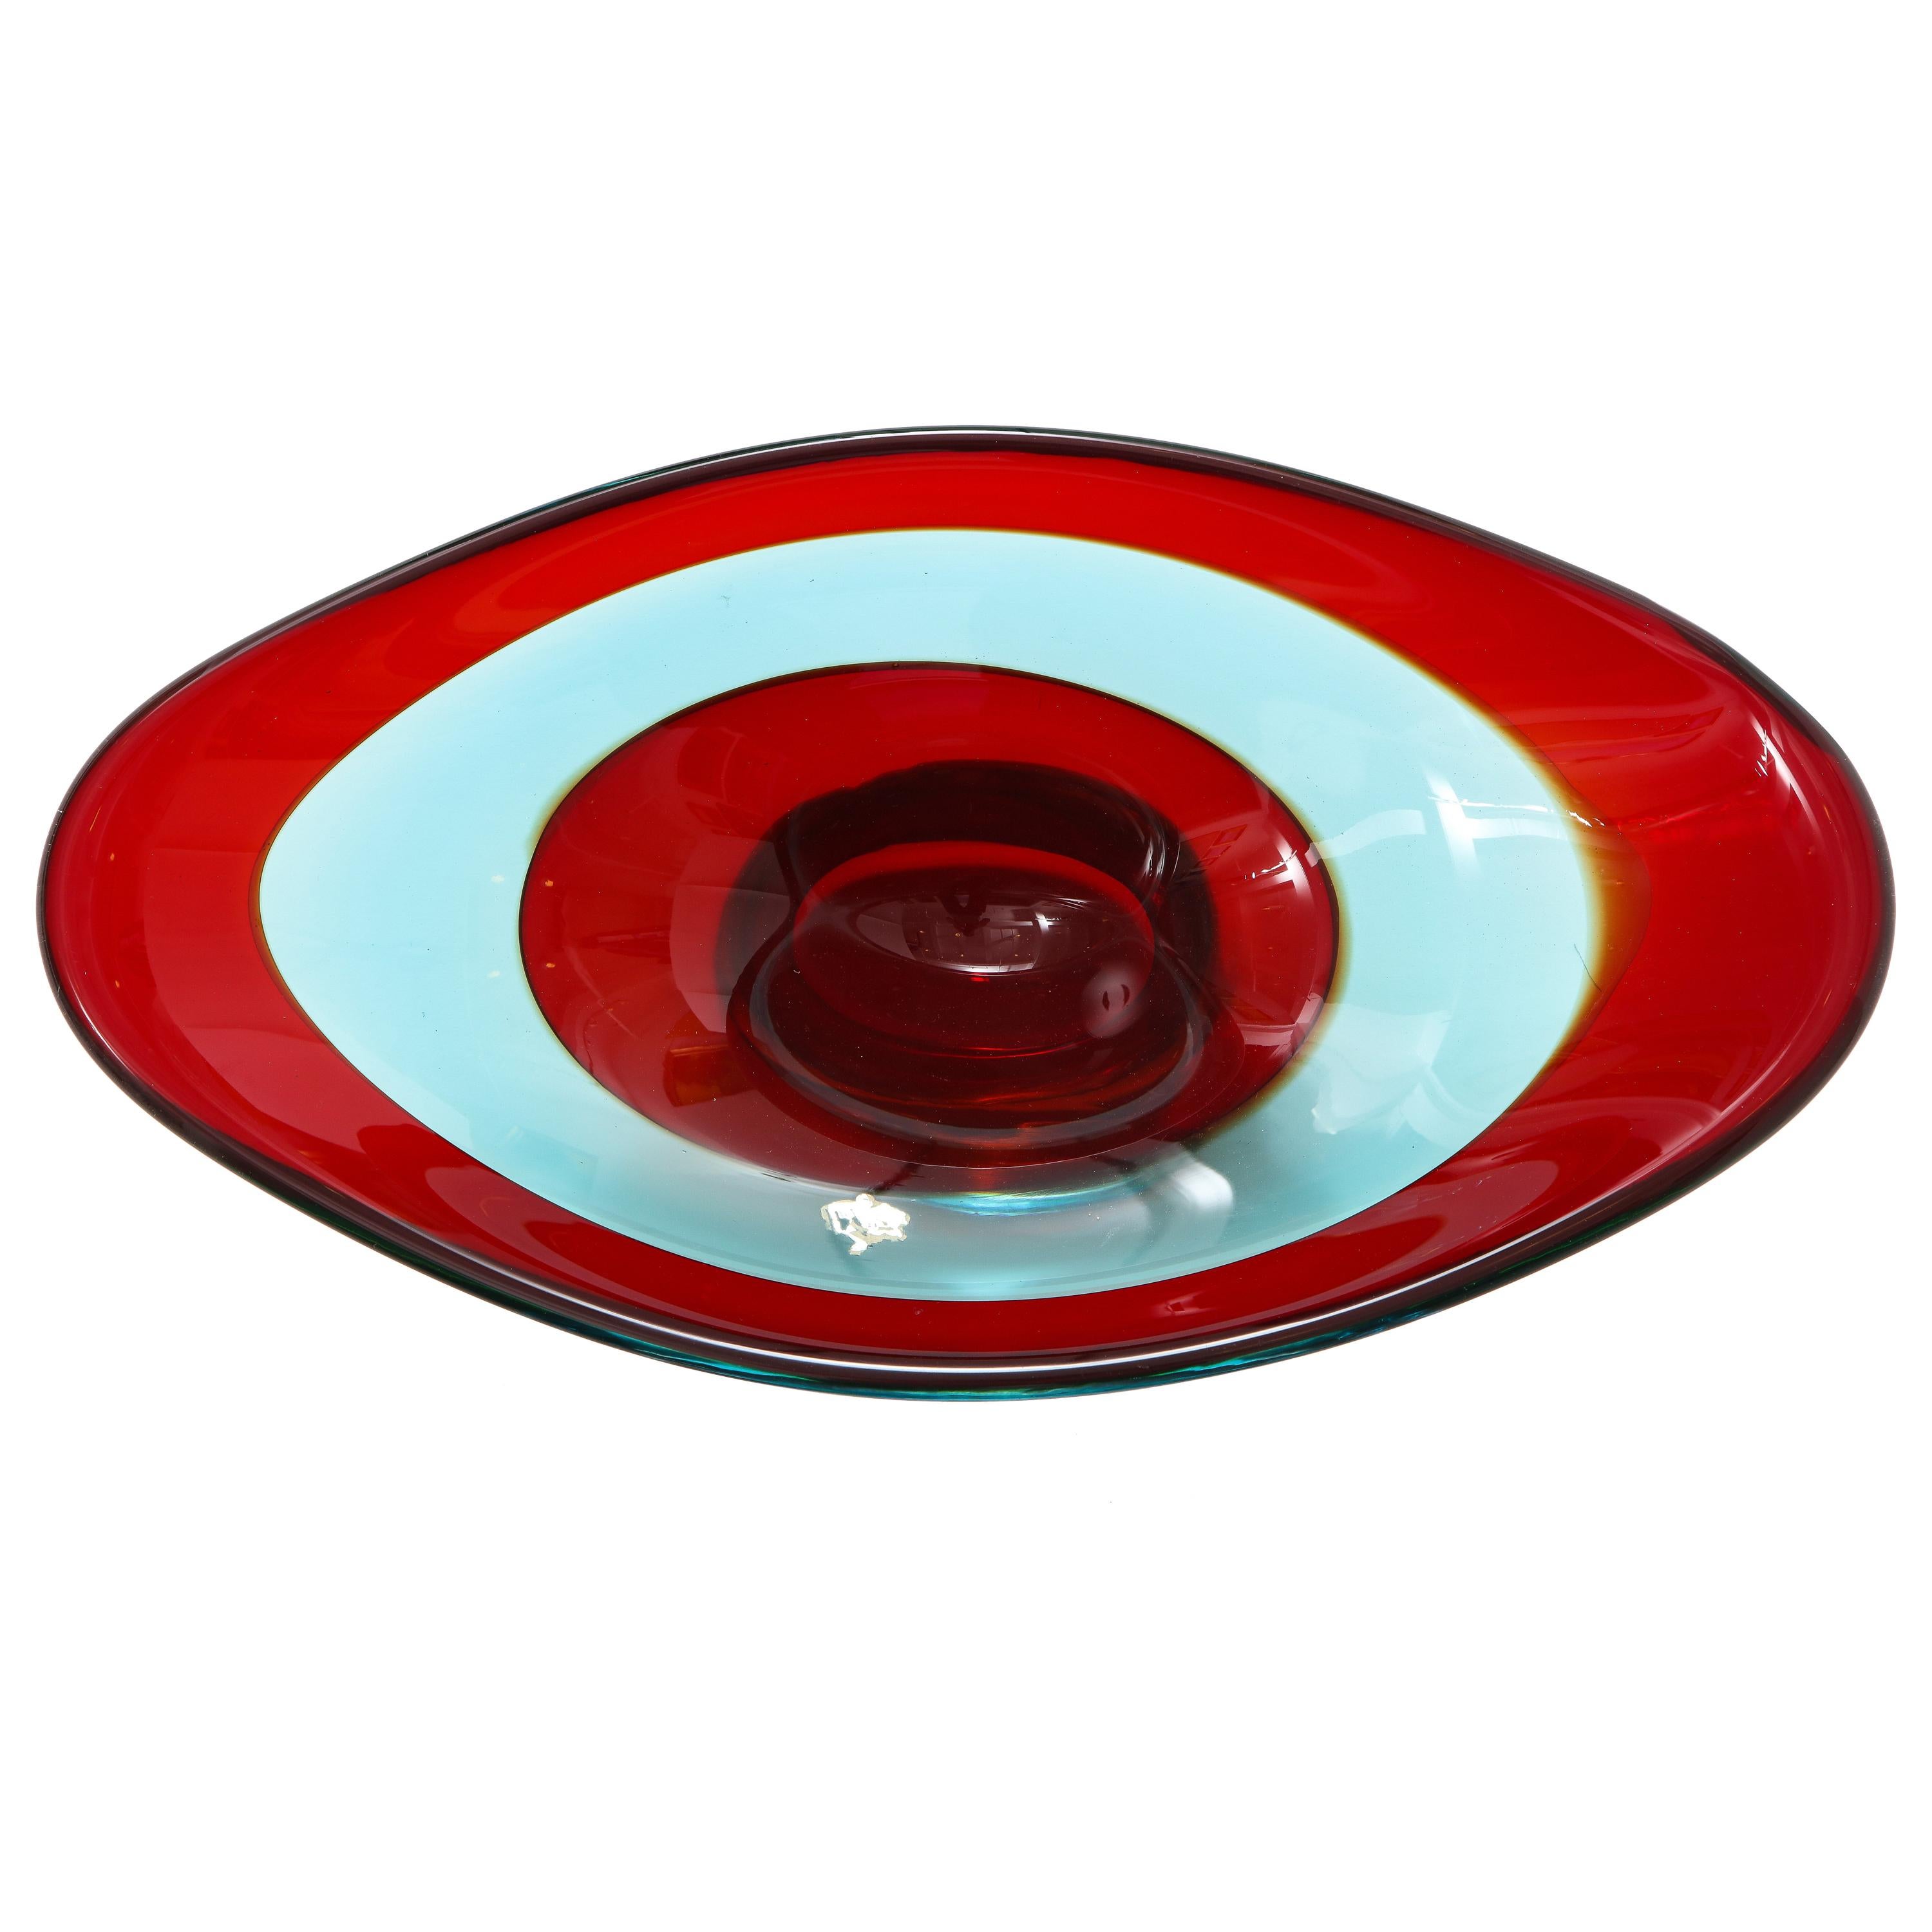 Vibrant Murano glass bowl by Fulvio Bianconi.
Bearing sticker: 